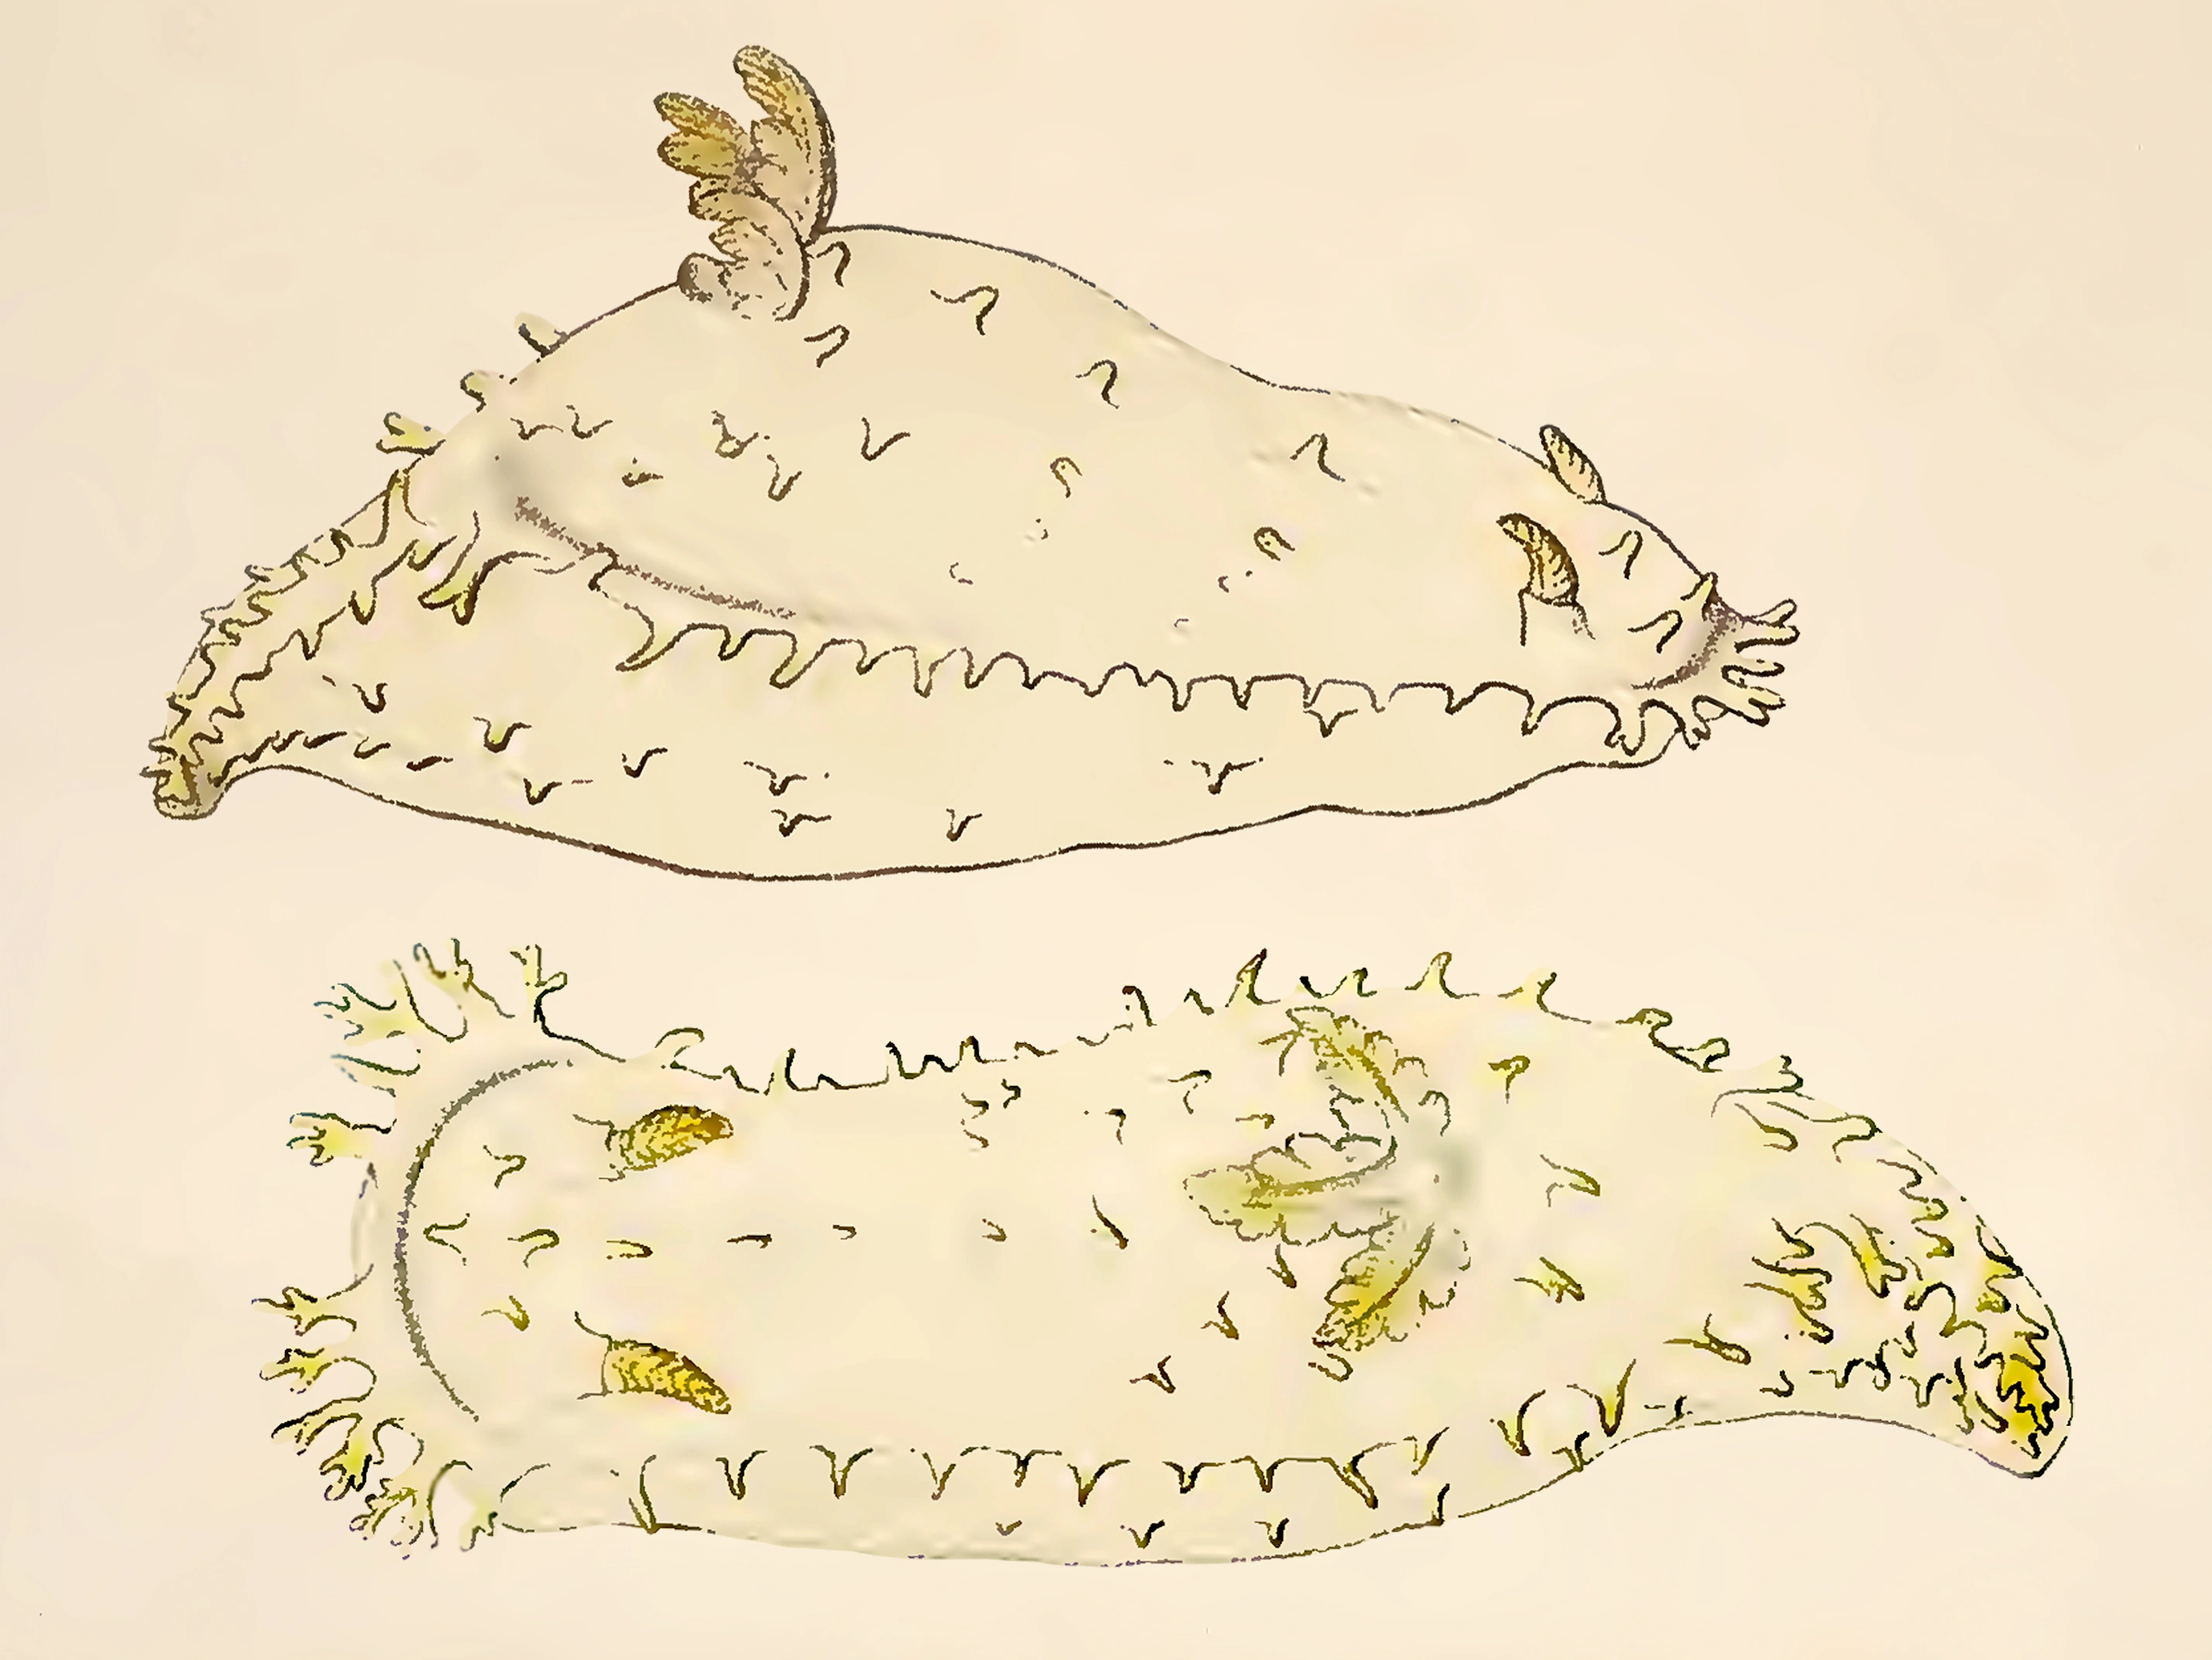 Snegler: Crimora papillata.